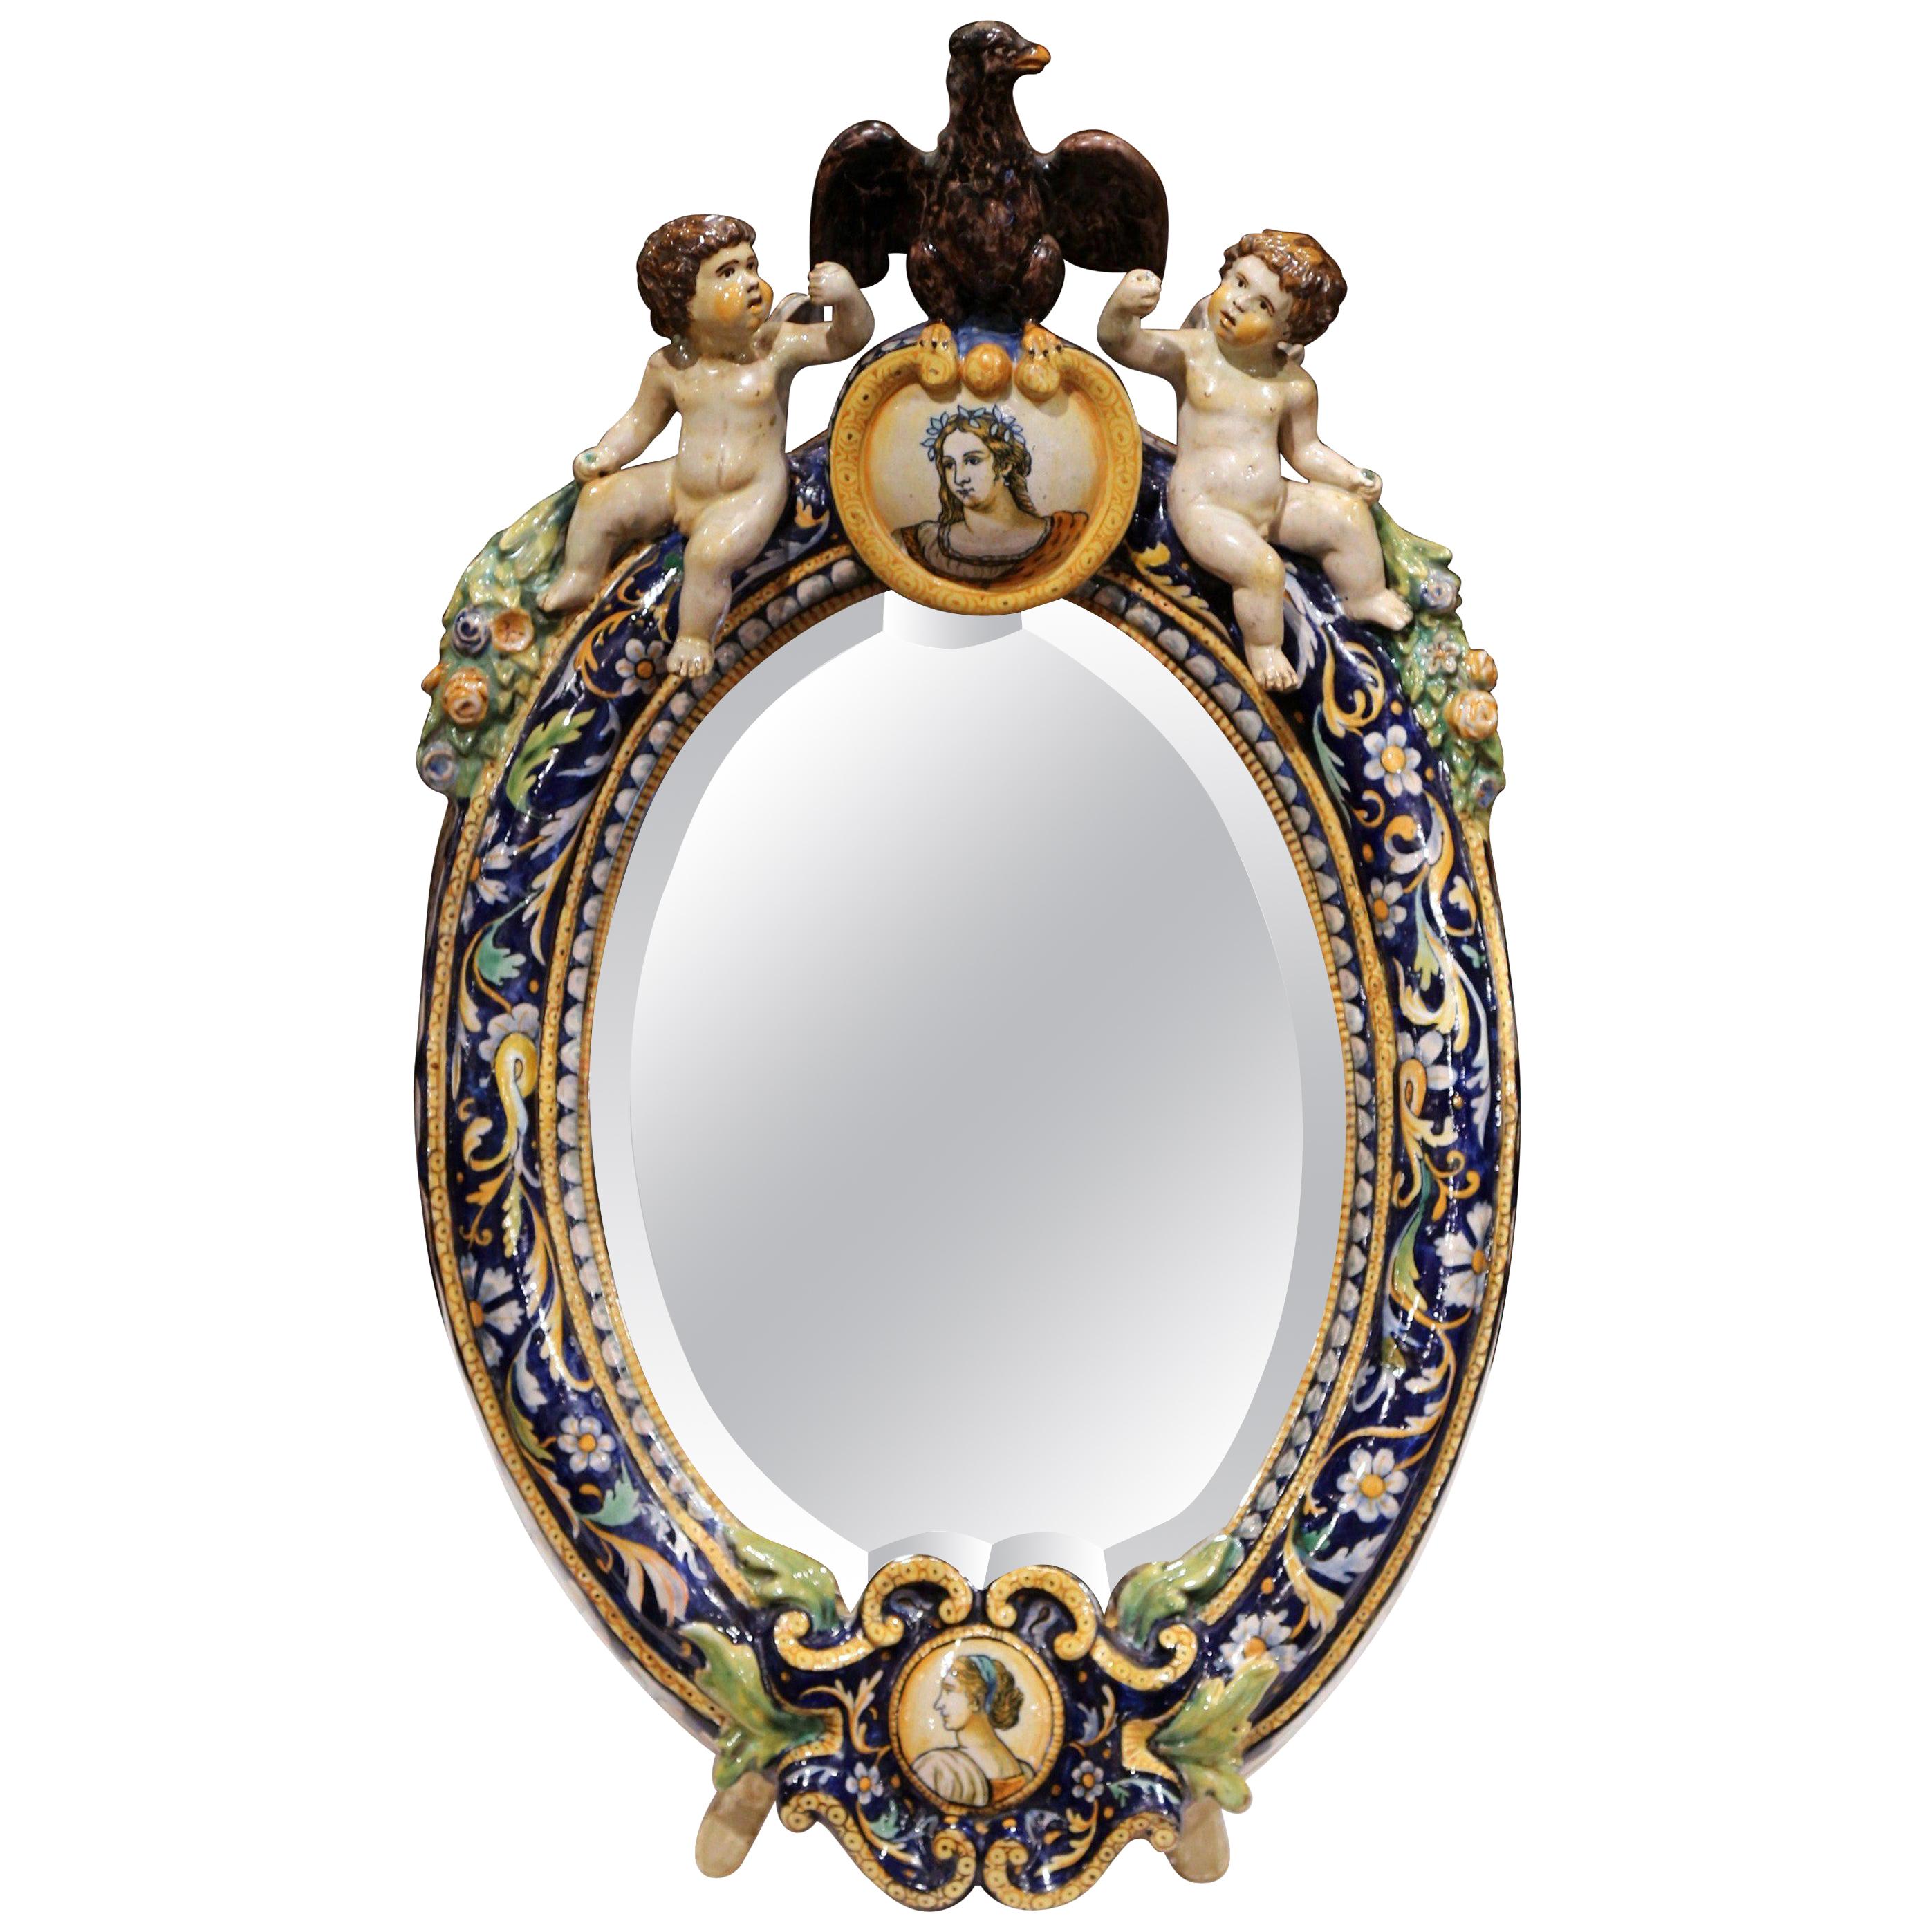 19th Century French Painted Ceramic Freestanding Beveled Vanity Mirror